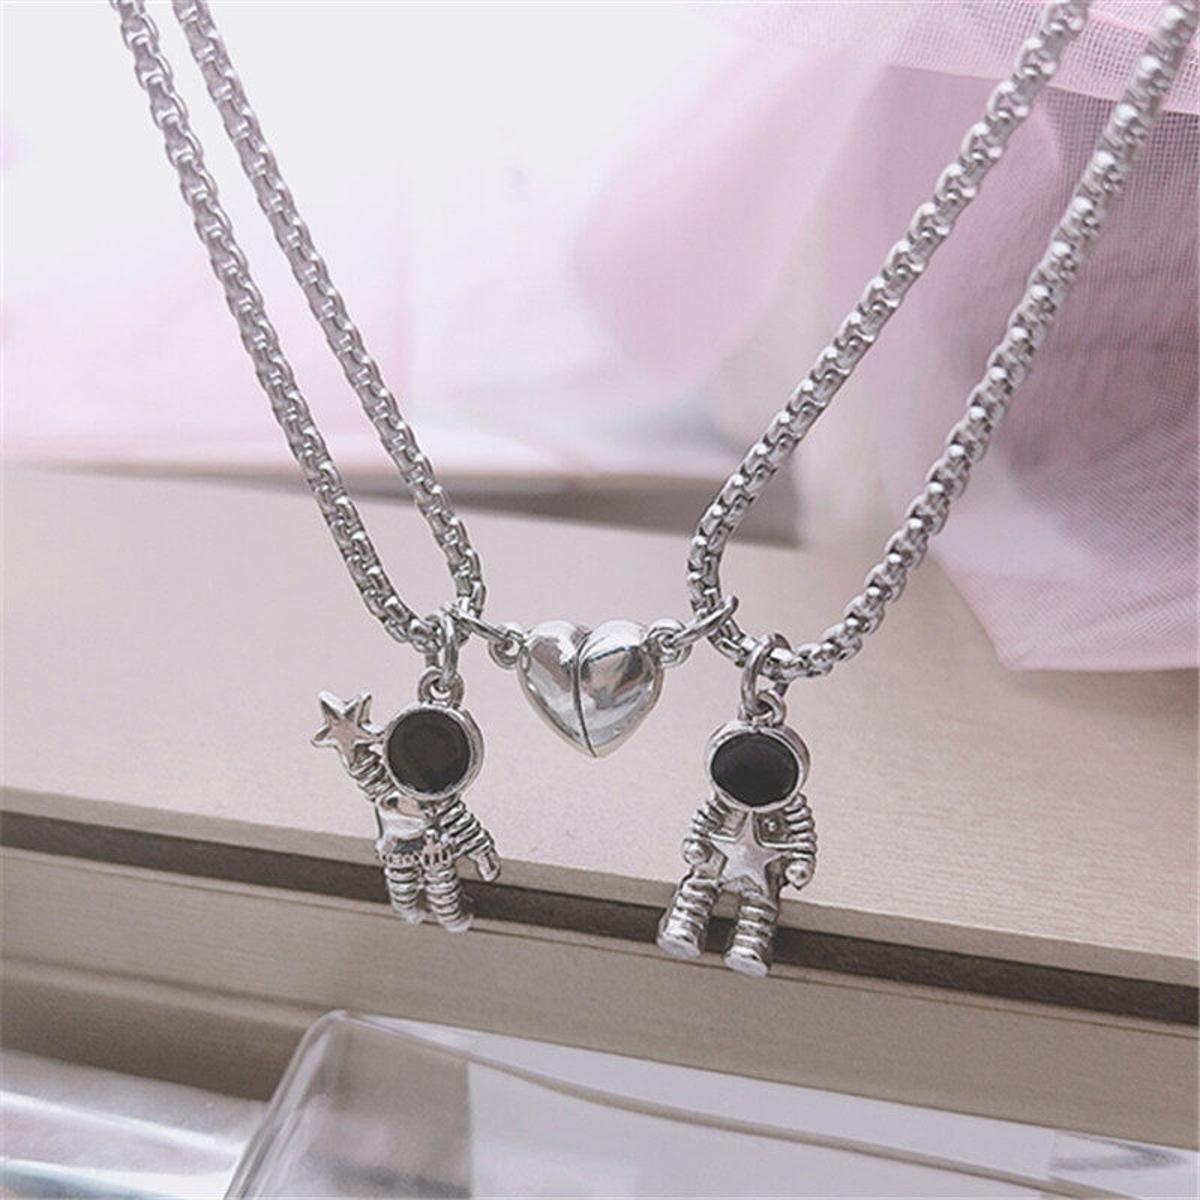 Couple Necklace - Spaceman / Astronaut Magnetic Pendant Necklace - 2pcs / Pack - Creative Star Friendship Love Jewelry Necklace